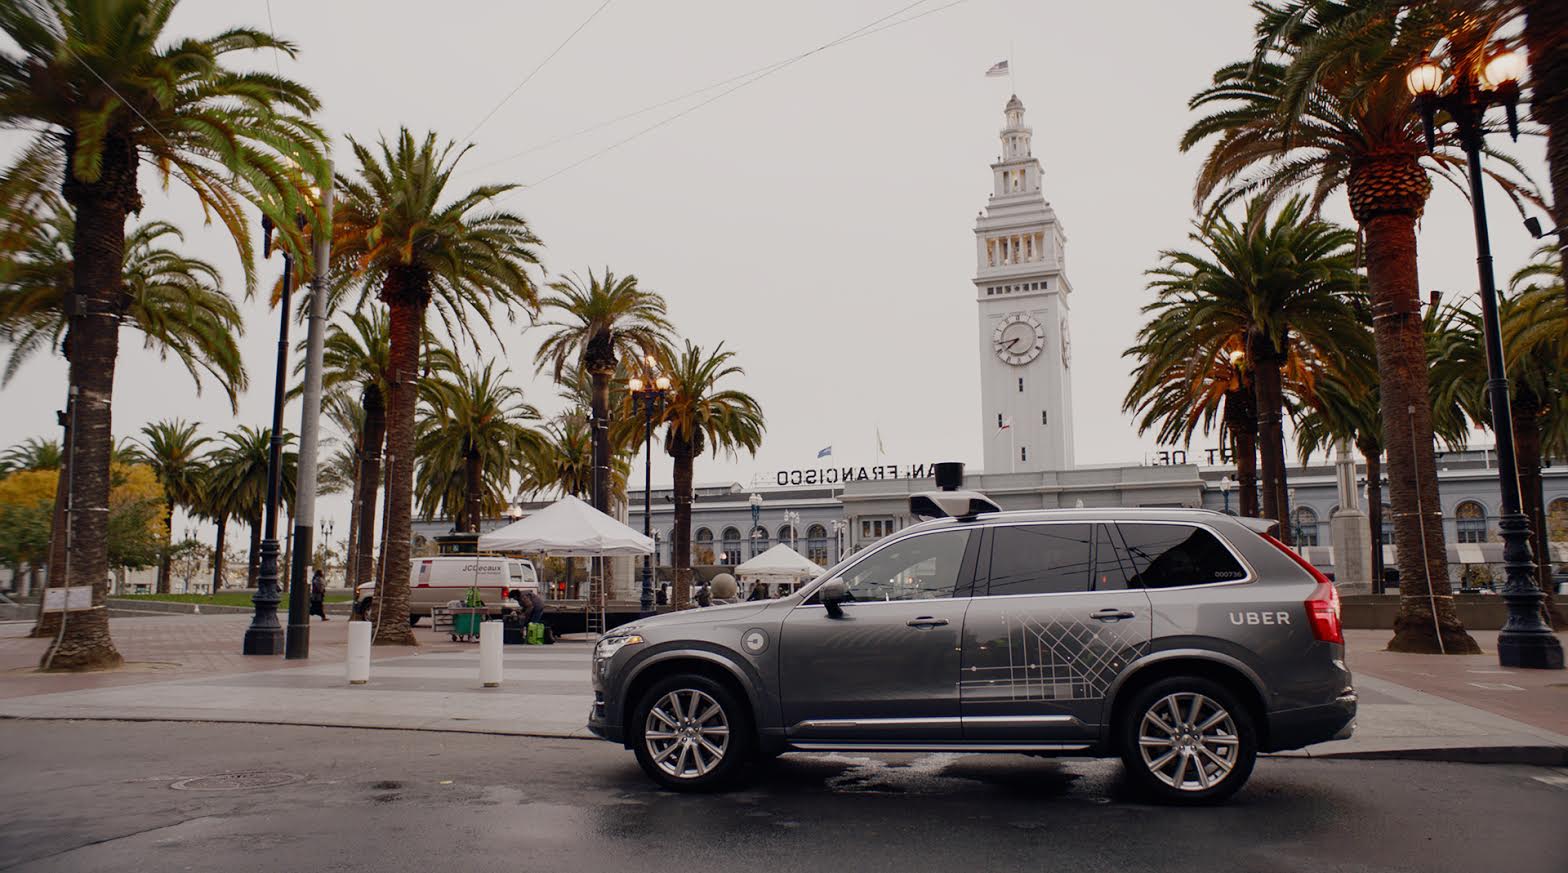 Uber's semi-autonomous vehicles hit the streets of San Francisco today